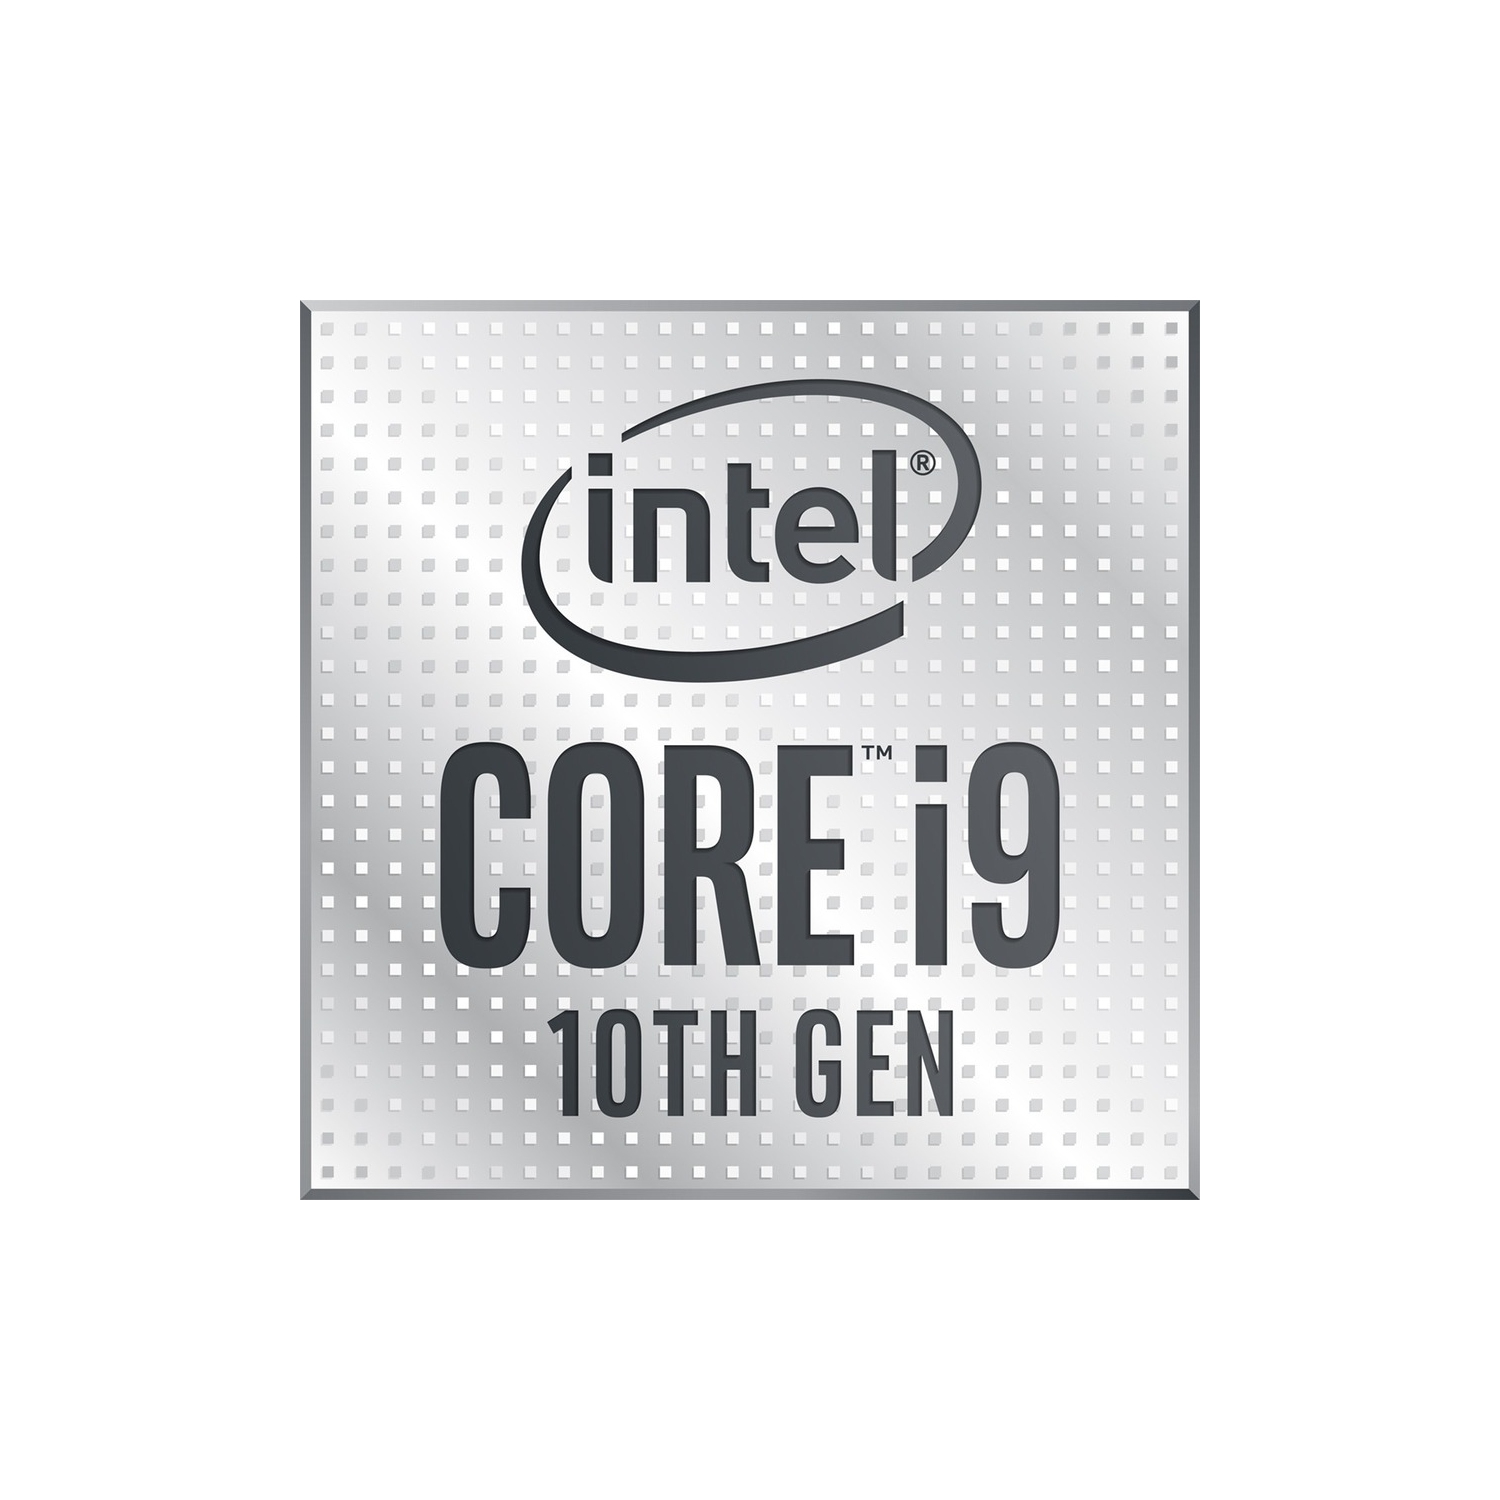 Intel Core i9-10900K 10th Gen 10-Core 20-Thread 3.7 GHz (5.3 GHz